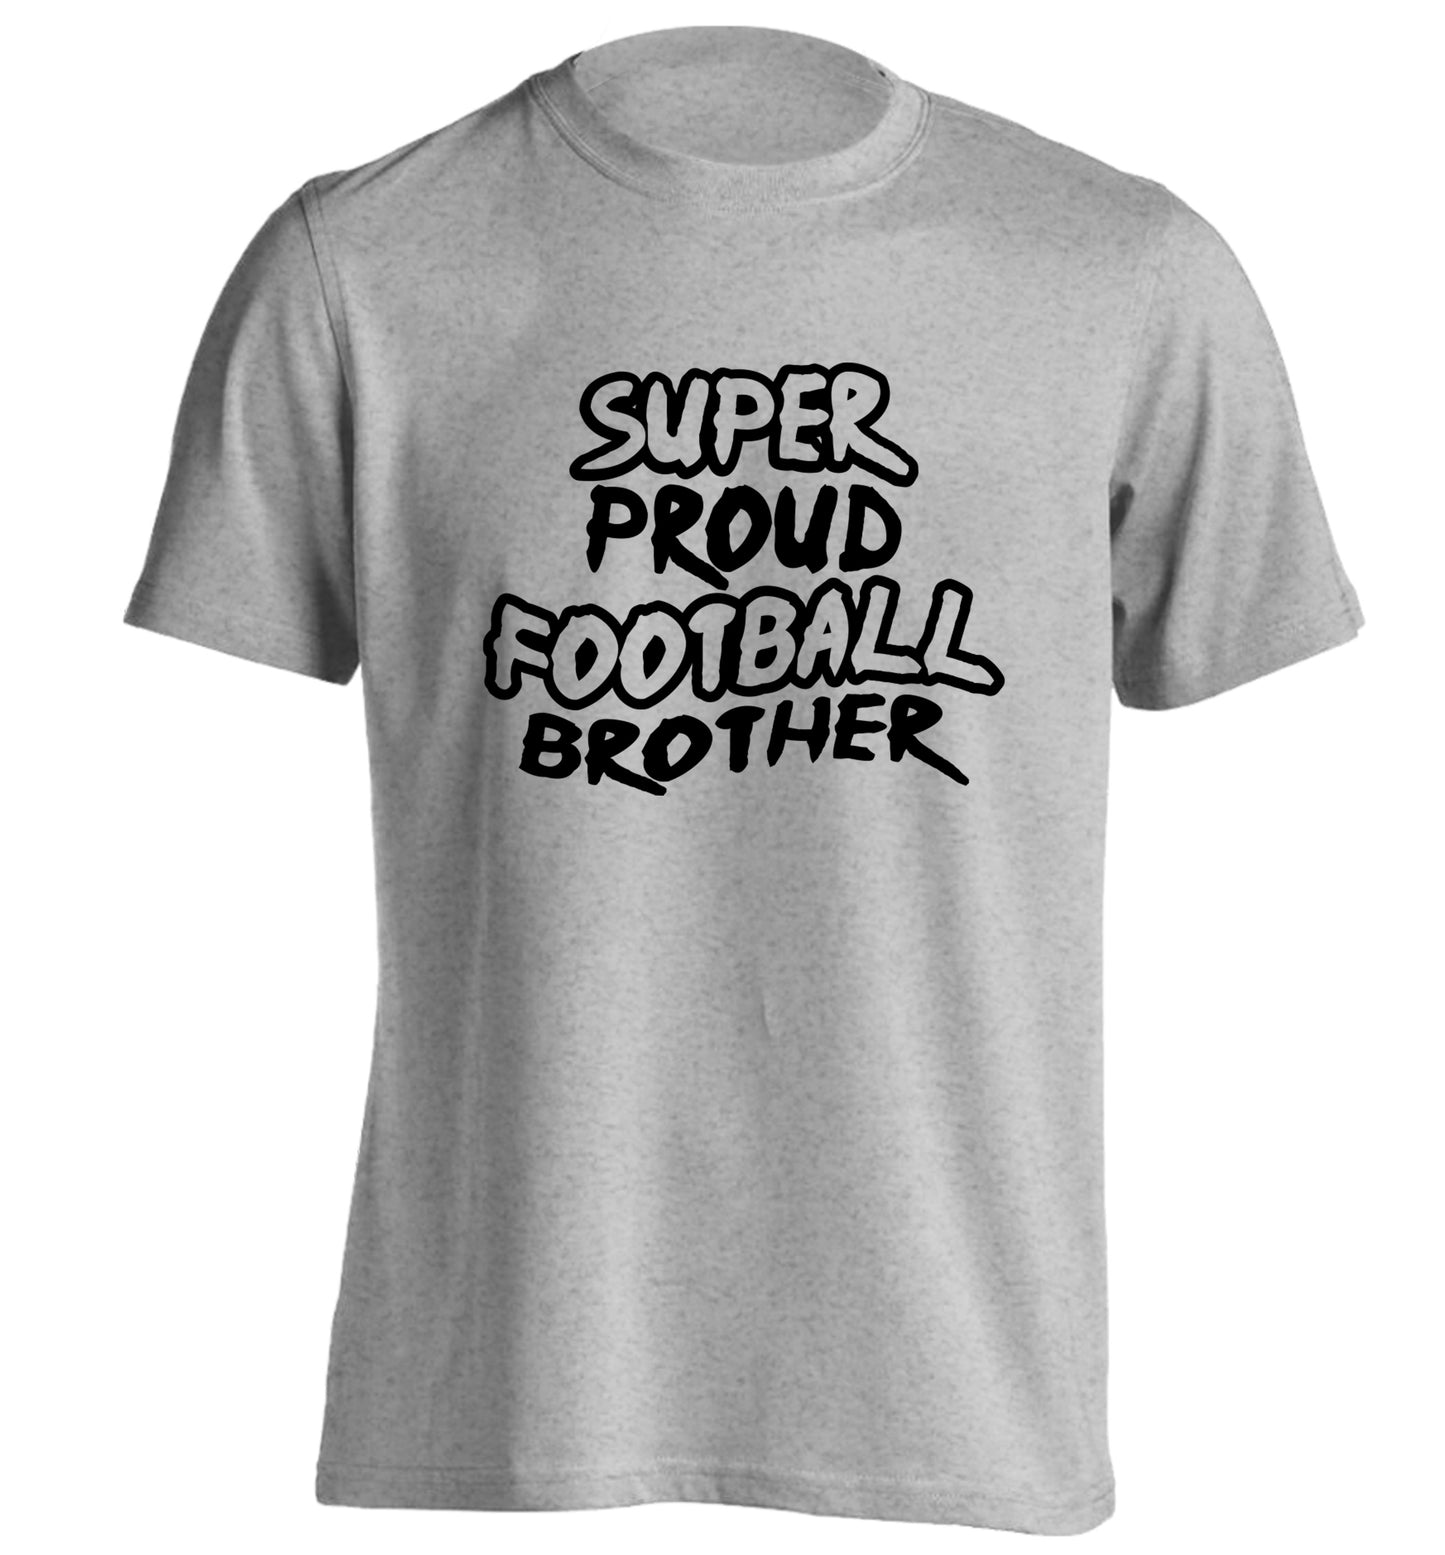 Super proud football brother adults unisexgrey Tshirt 2XL